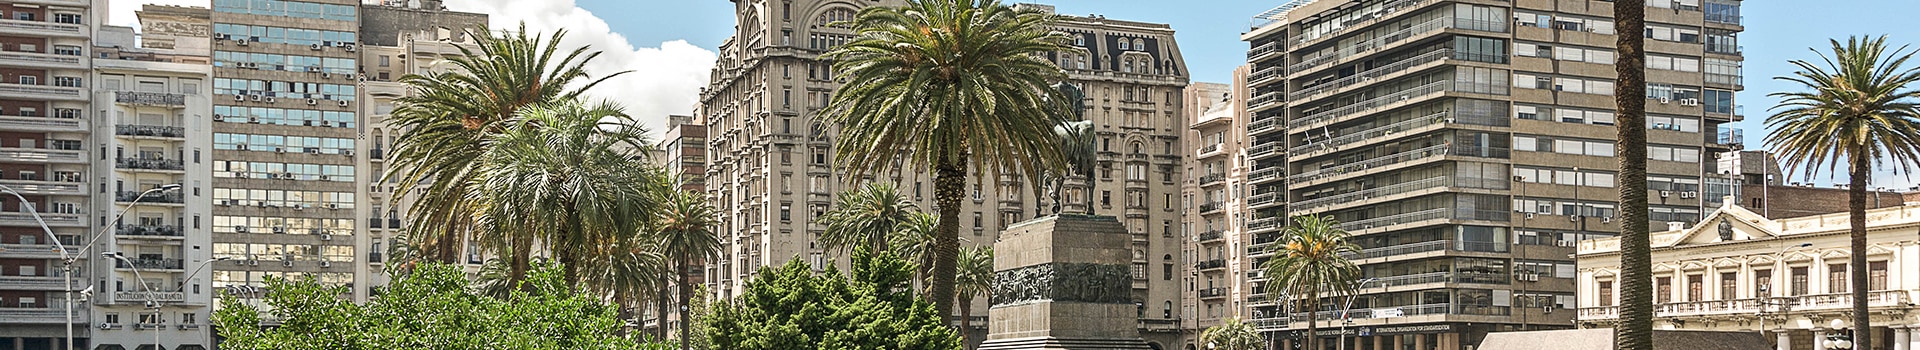 Barcelona - Montevideo